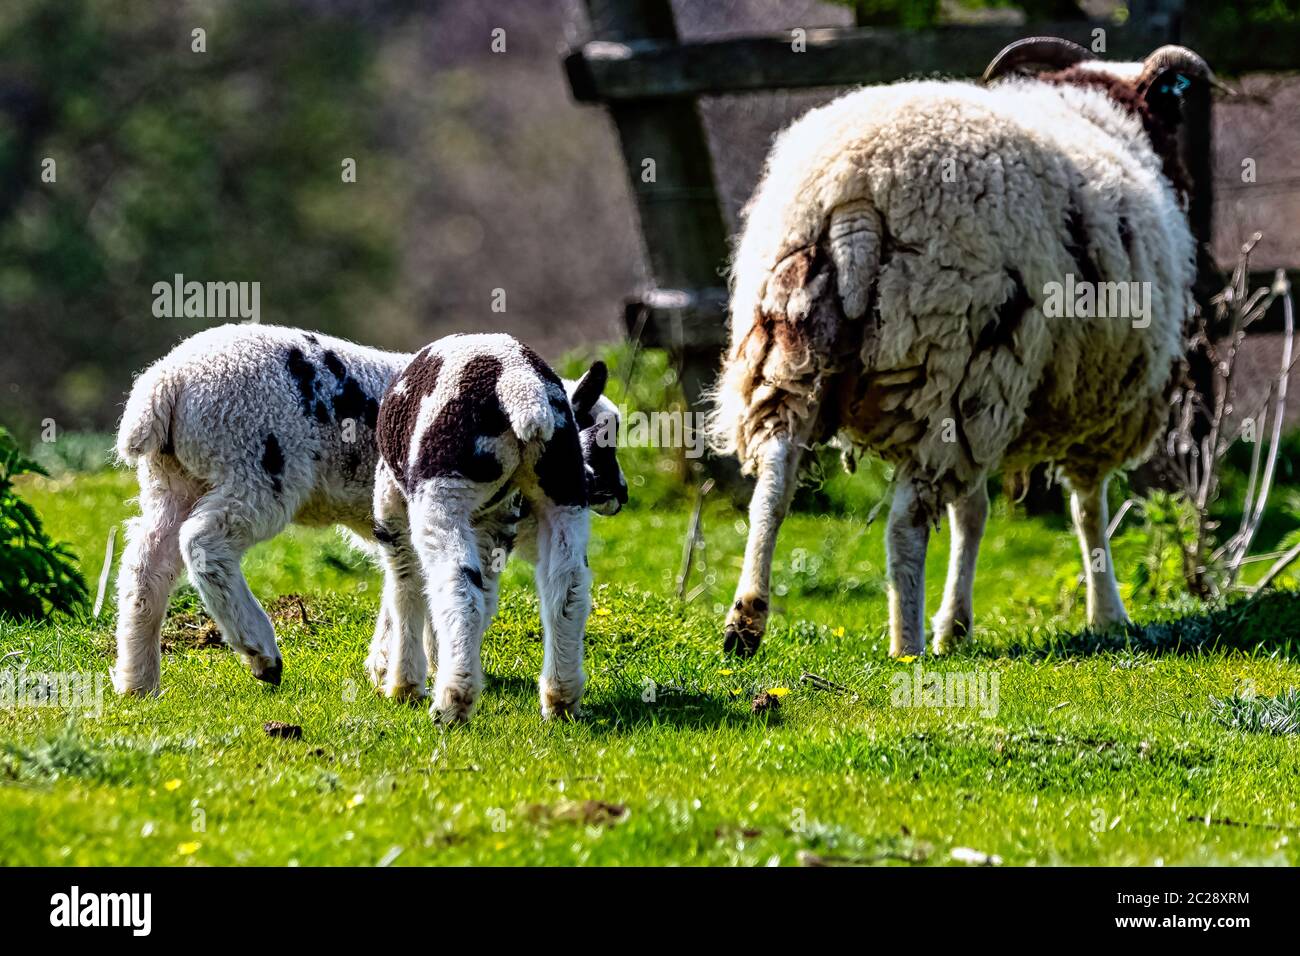 Baby domestic sheep (Ovis aries) in Stowe, Buckinghamshire, United Kingdom Stock Photo